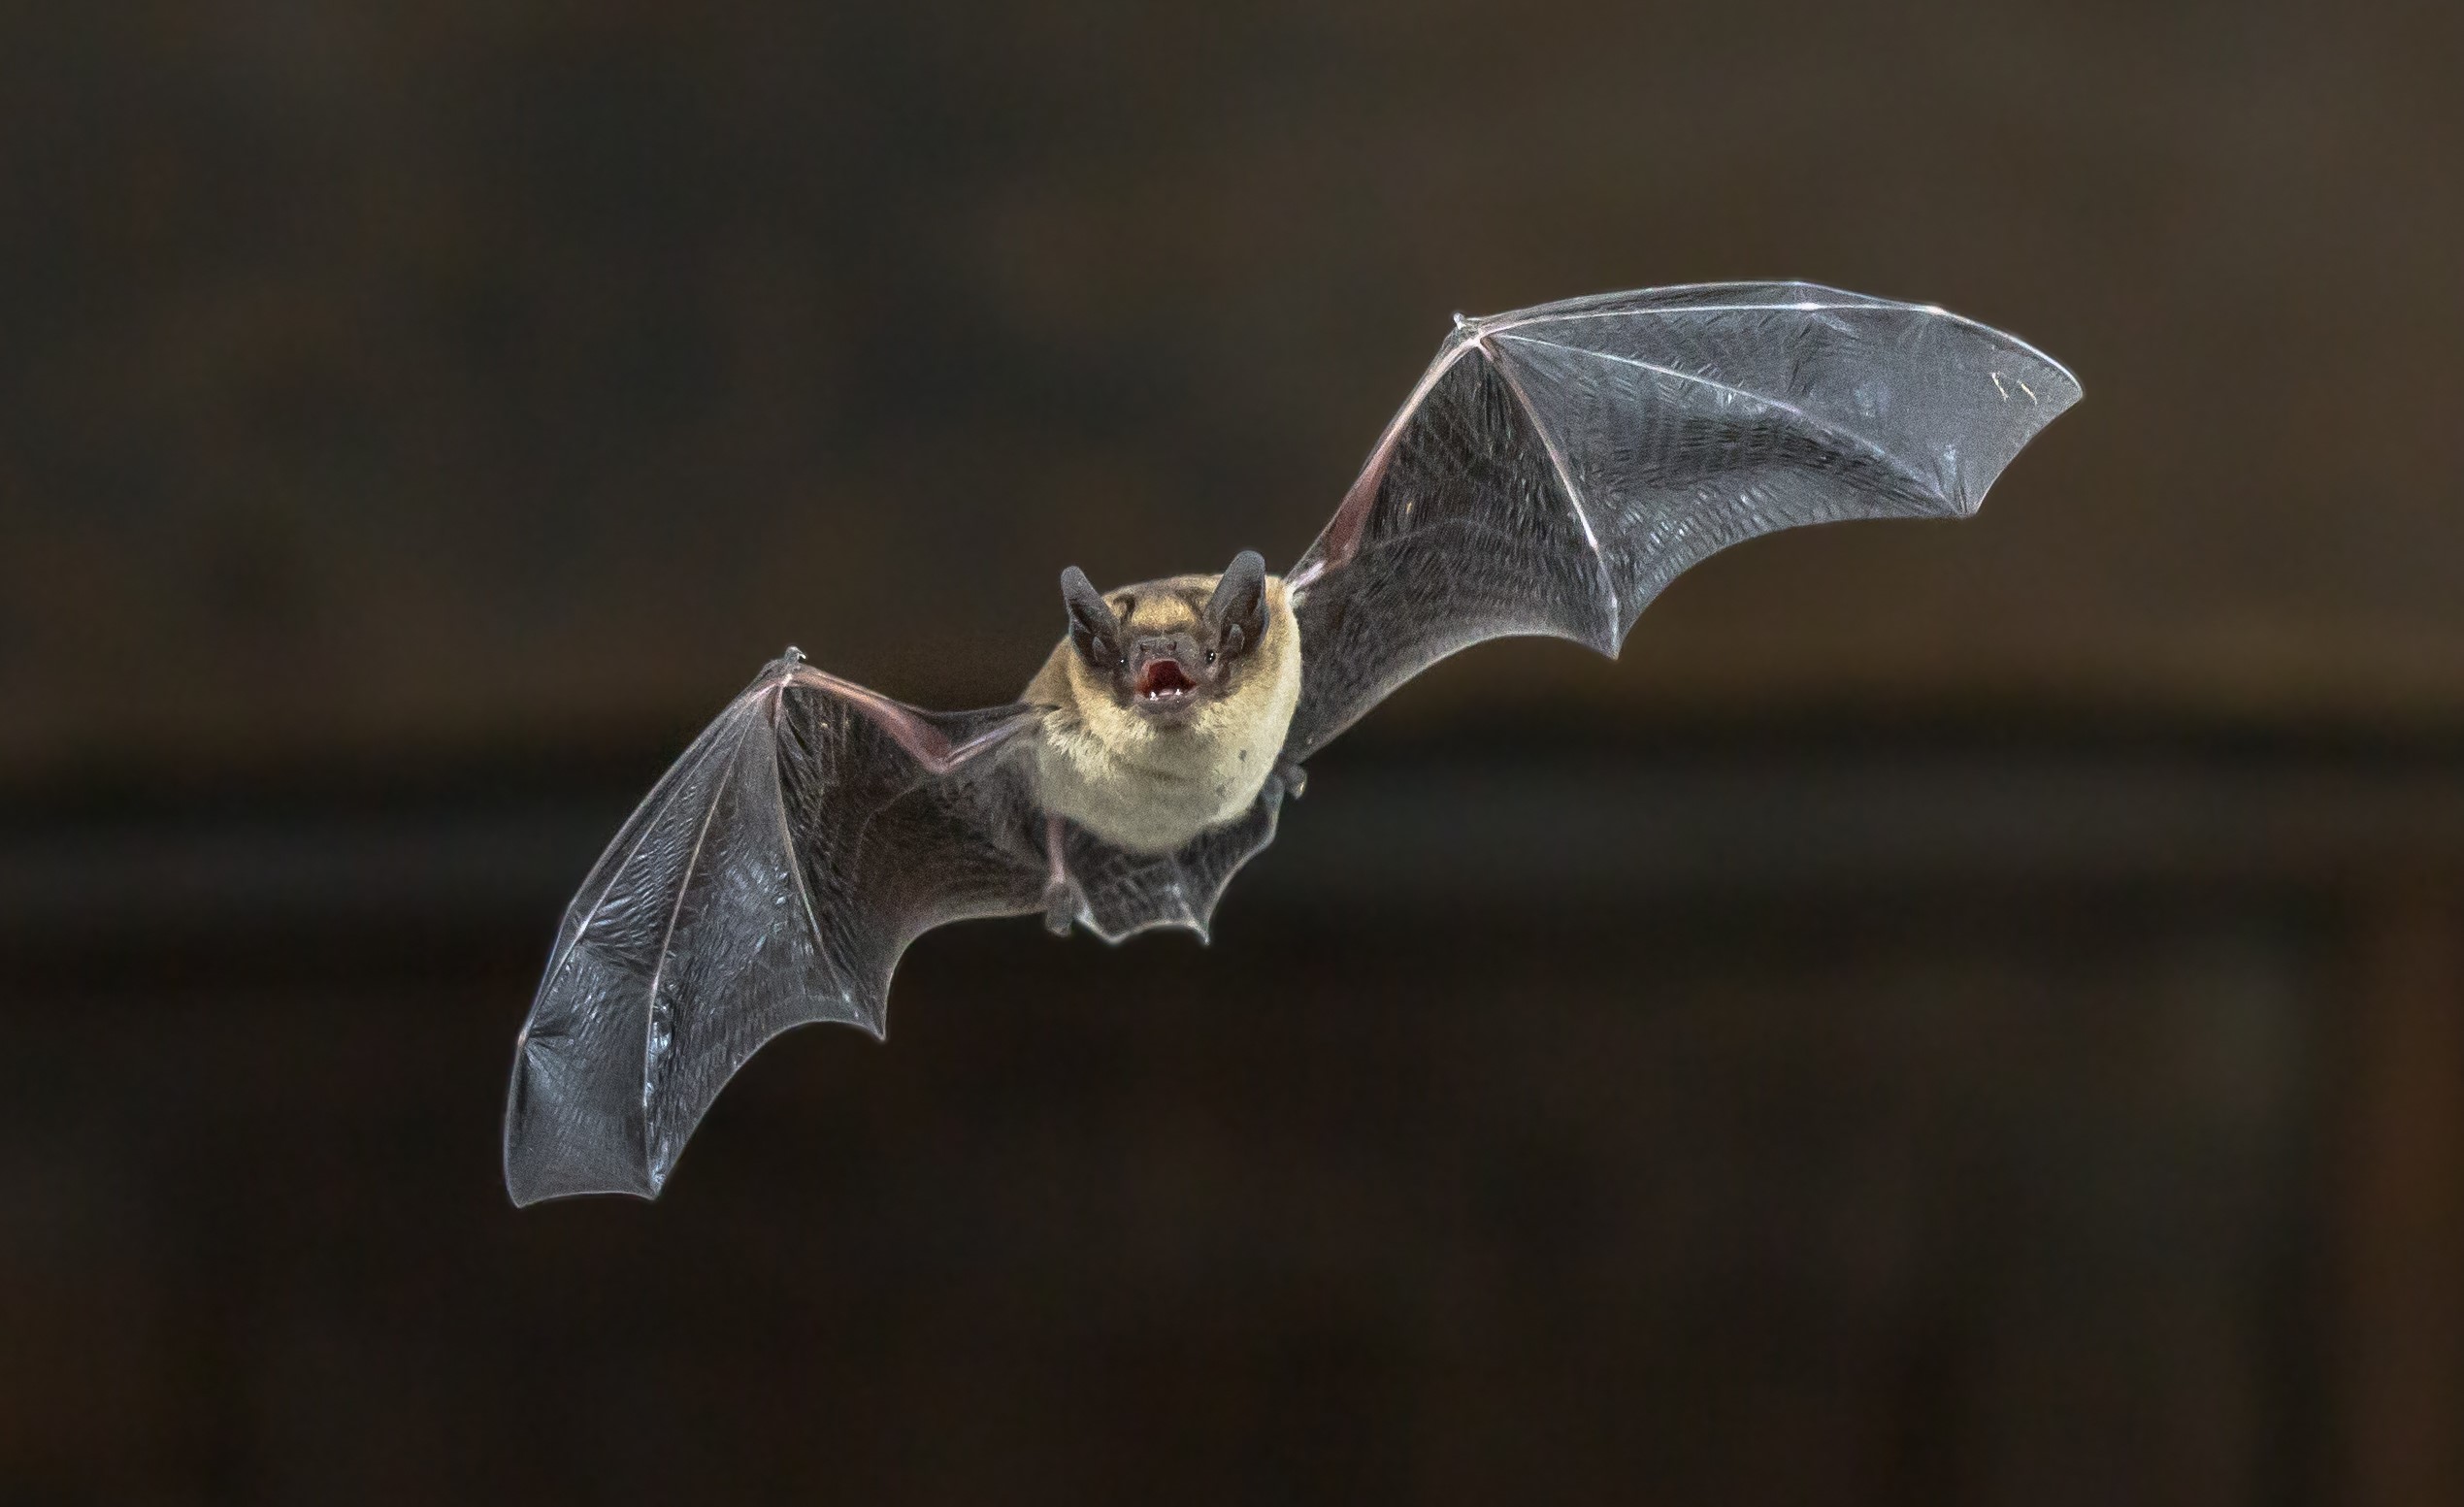 A bat in flight.